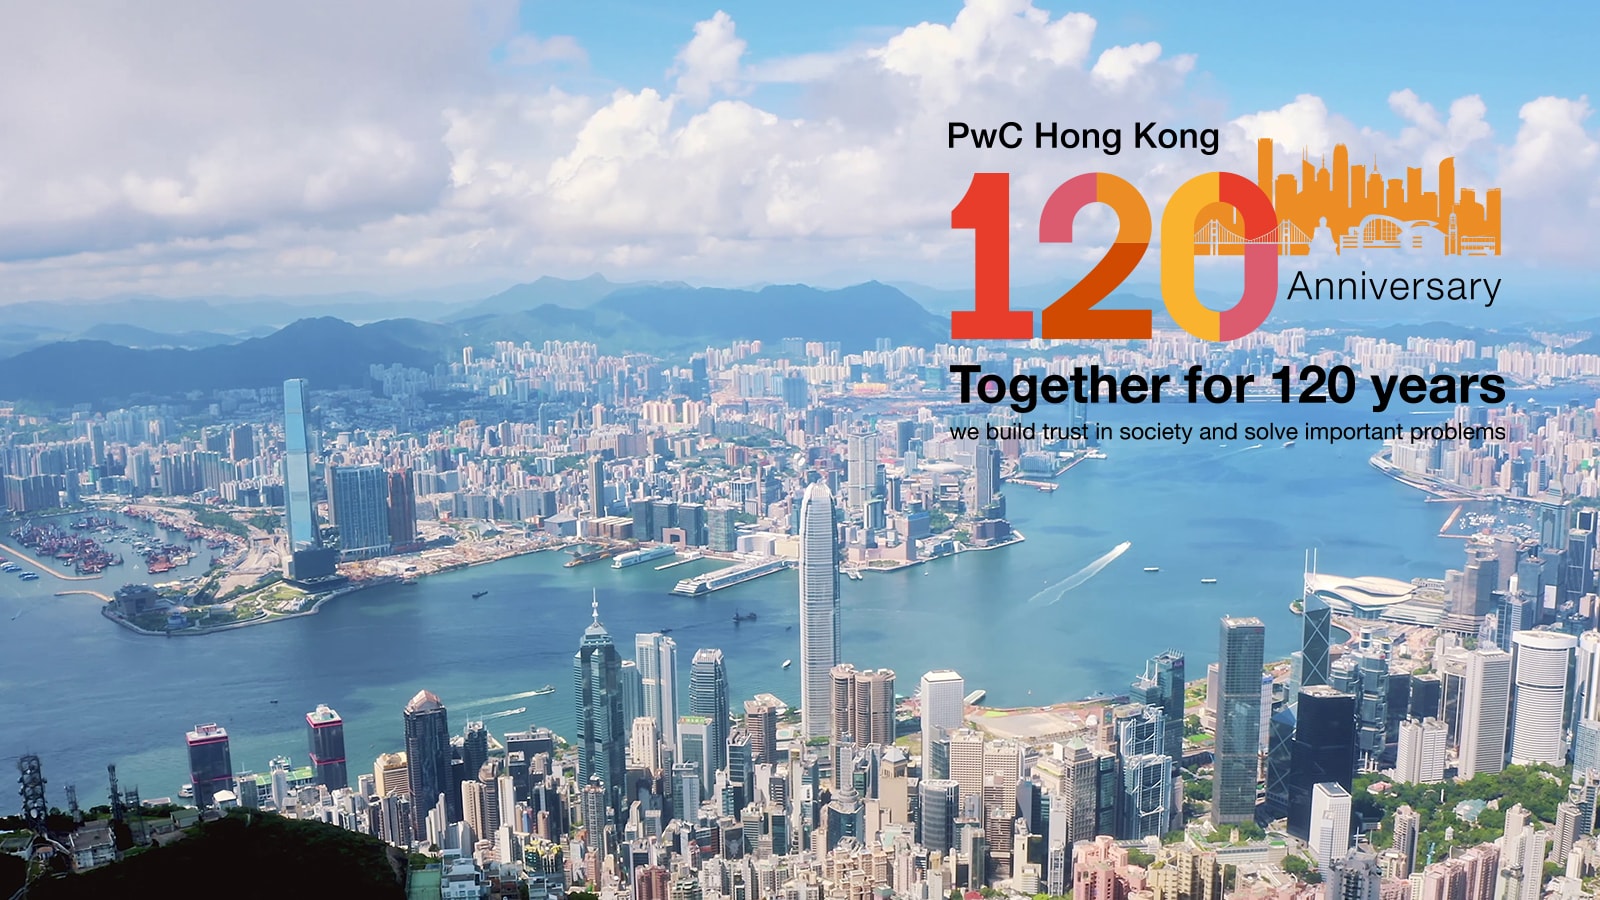 Celebrating 120 Years in Hong Kong